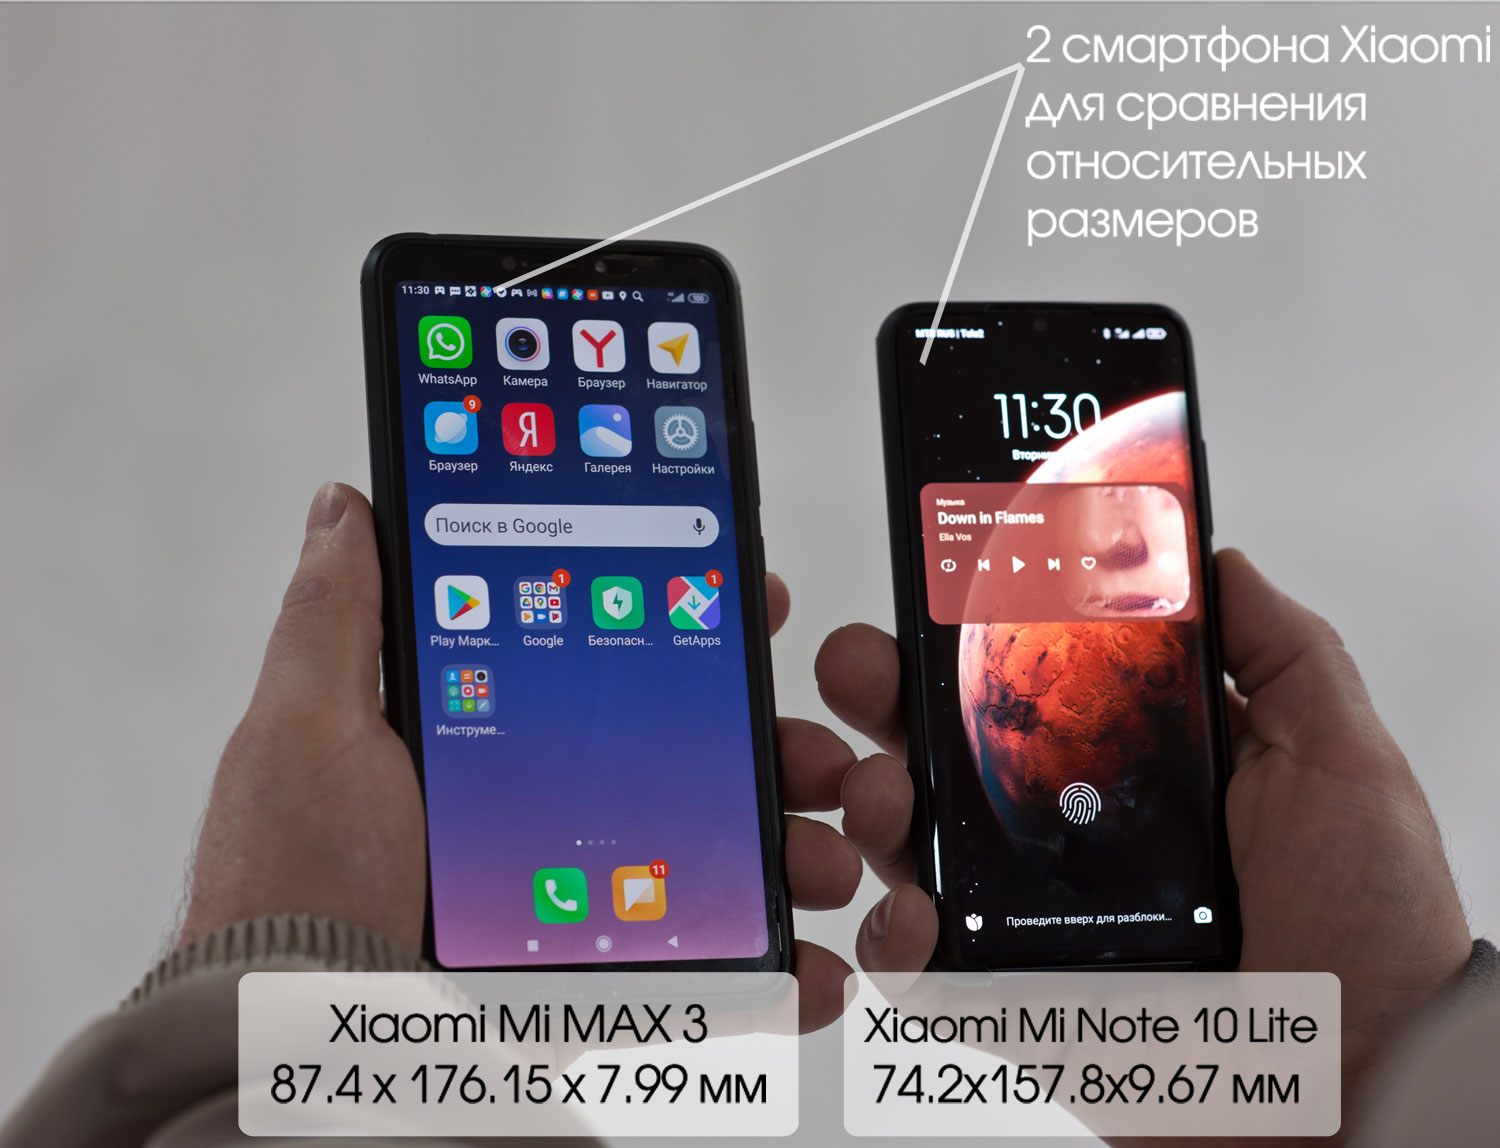 Размеры Xiaomi Mi Note 10 Lite и Xiaomi Mi Max 3